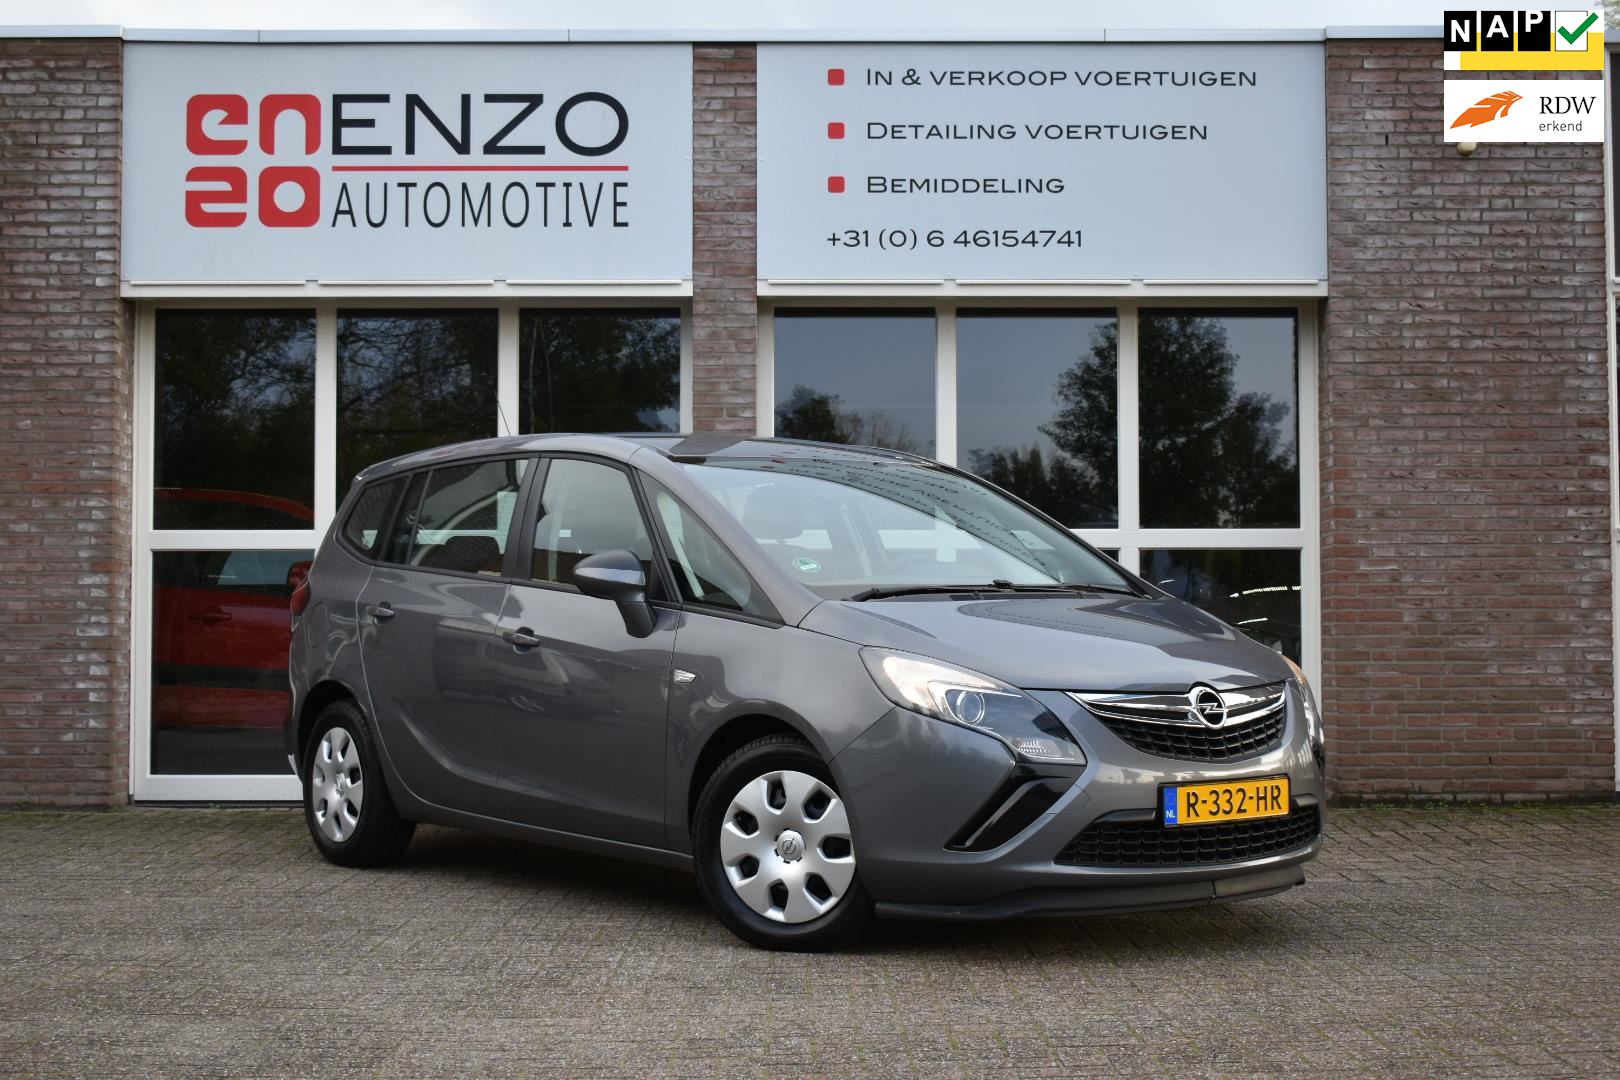 Opel ZAFIRA TOURER occasion - Enzo Automotive